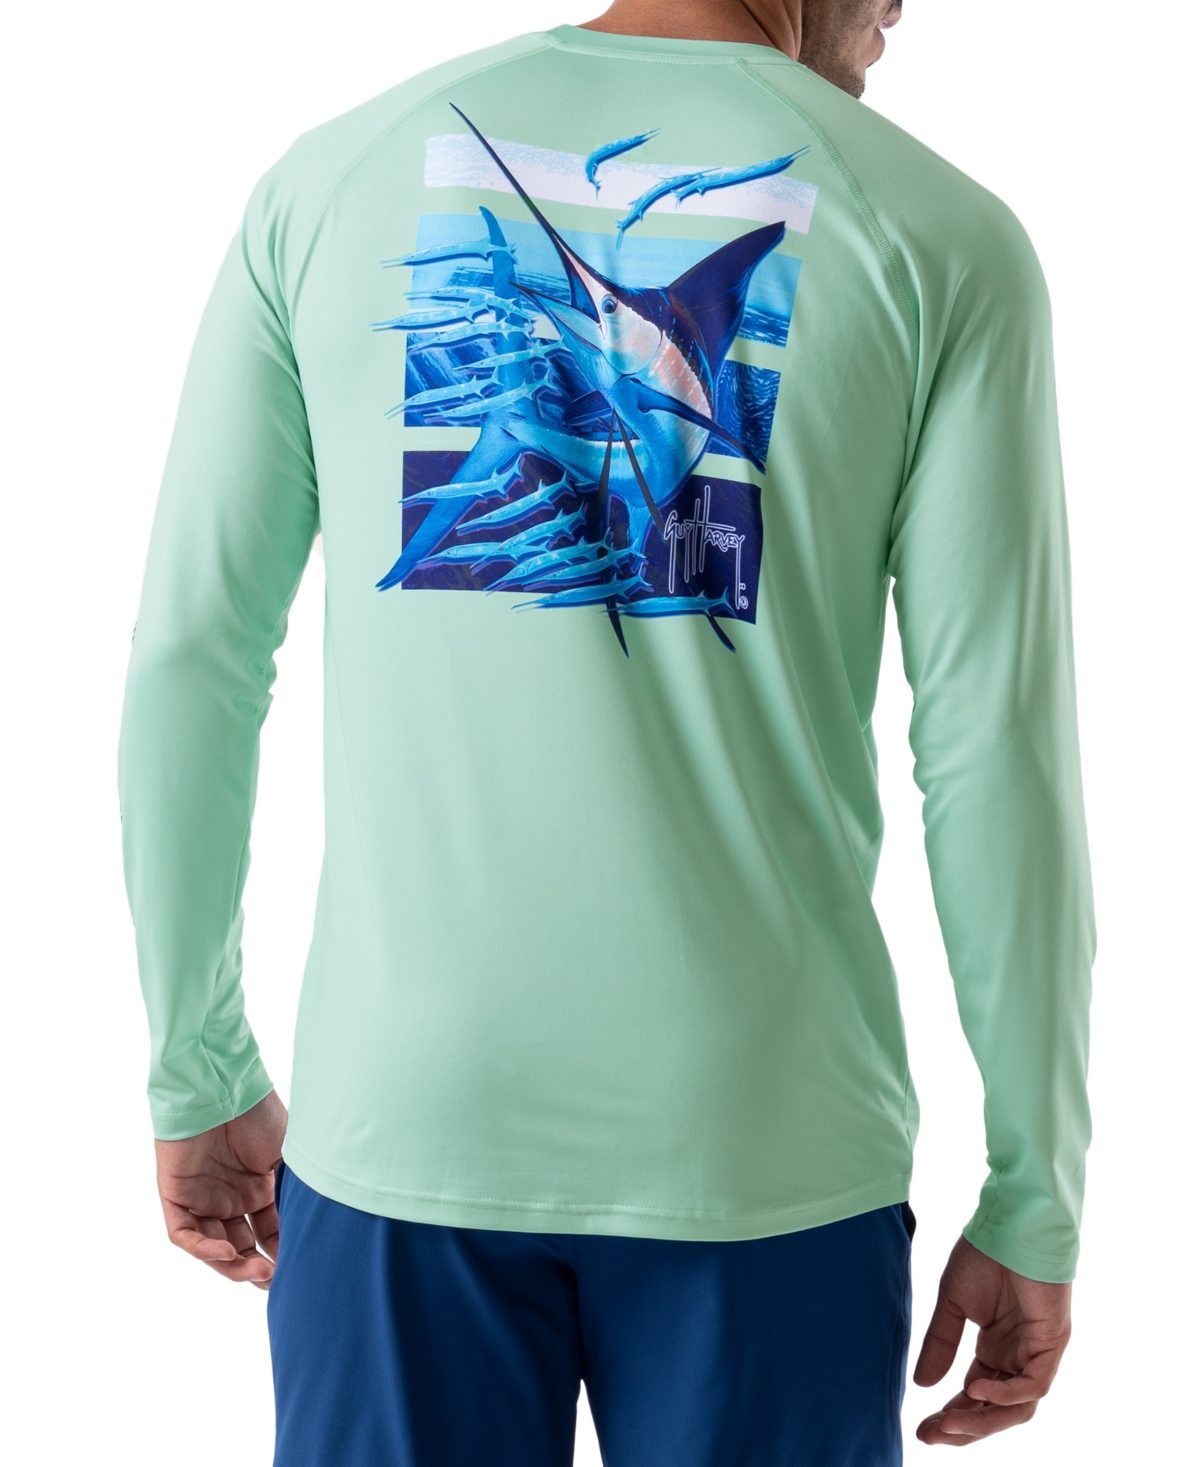 Men's Long-Sleeve Crewneck Upf Performance Graphic T-Shirt - Beach Glass